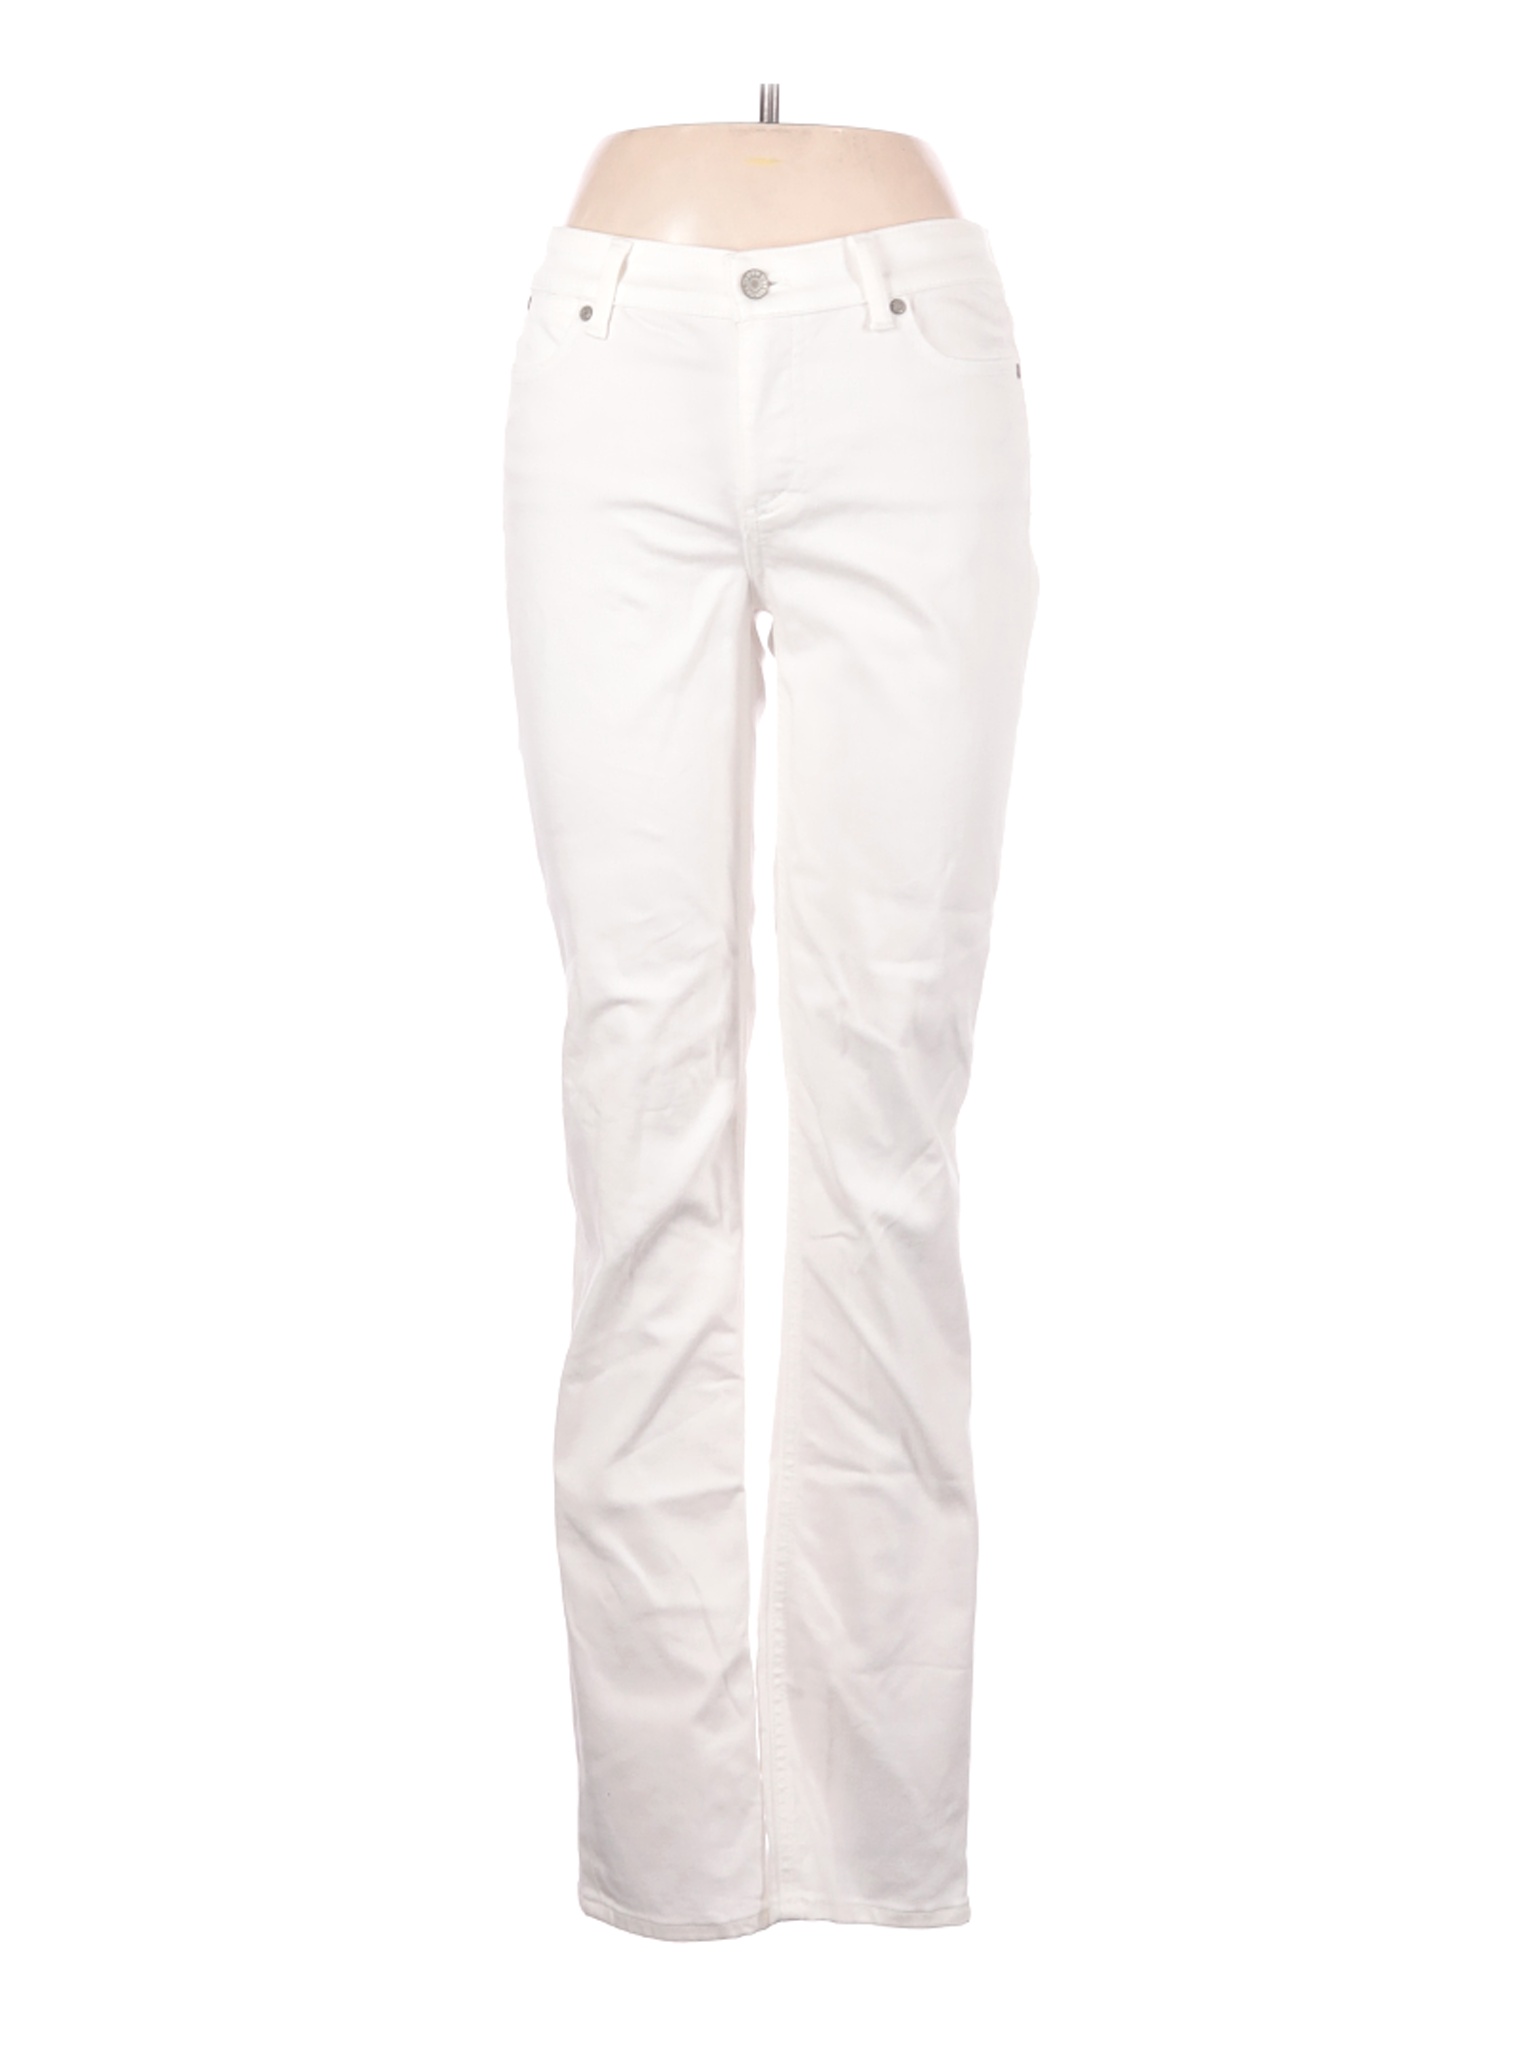 Talbots Women White Jeans 2 | eBay